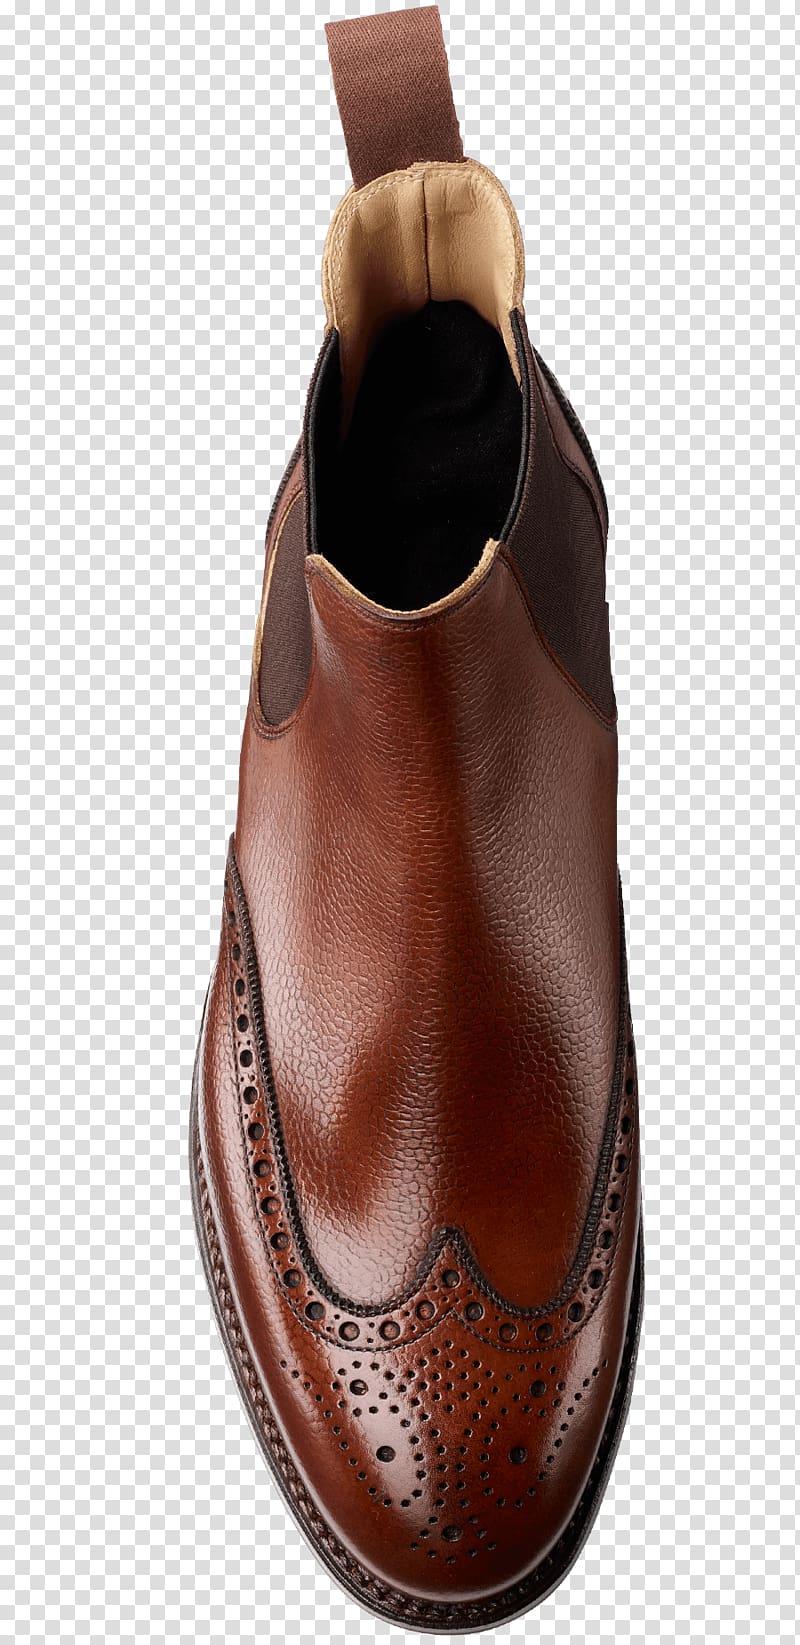 Leather Brogue shoe Crockett & Jones Chelsea boot, Goodyear Welt transparent background PNG clipart